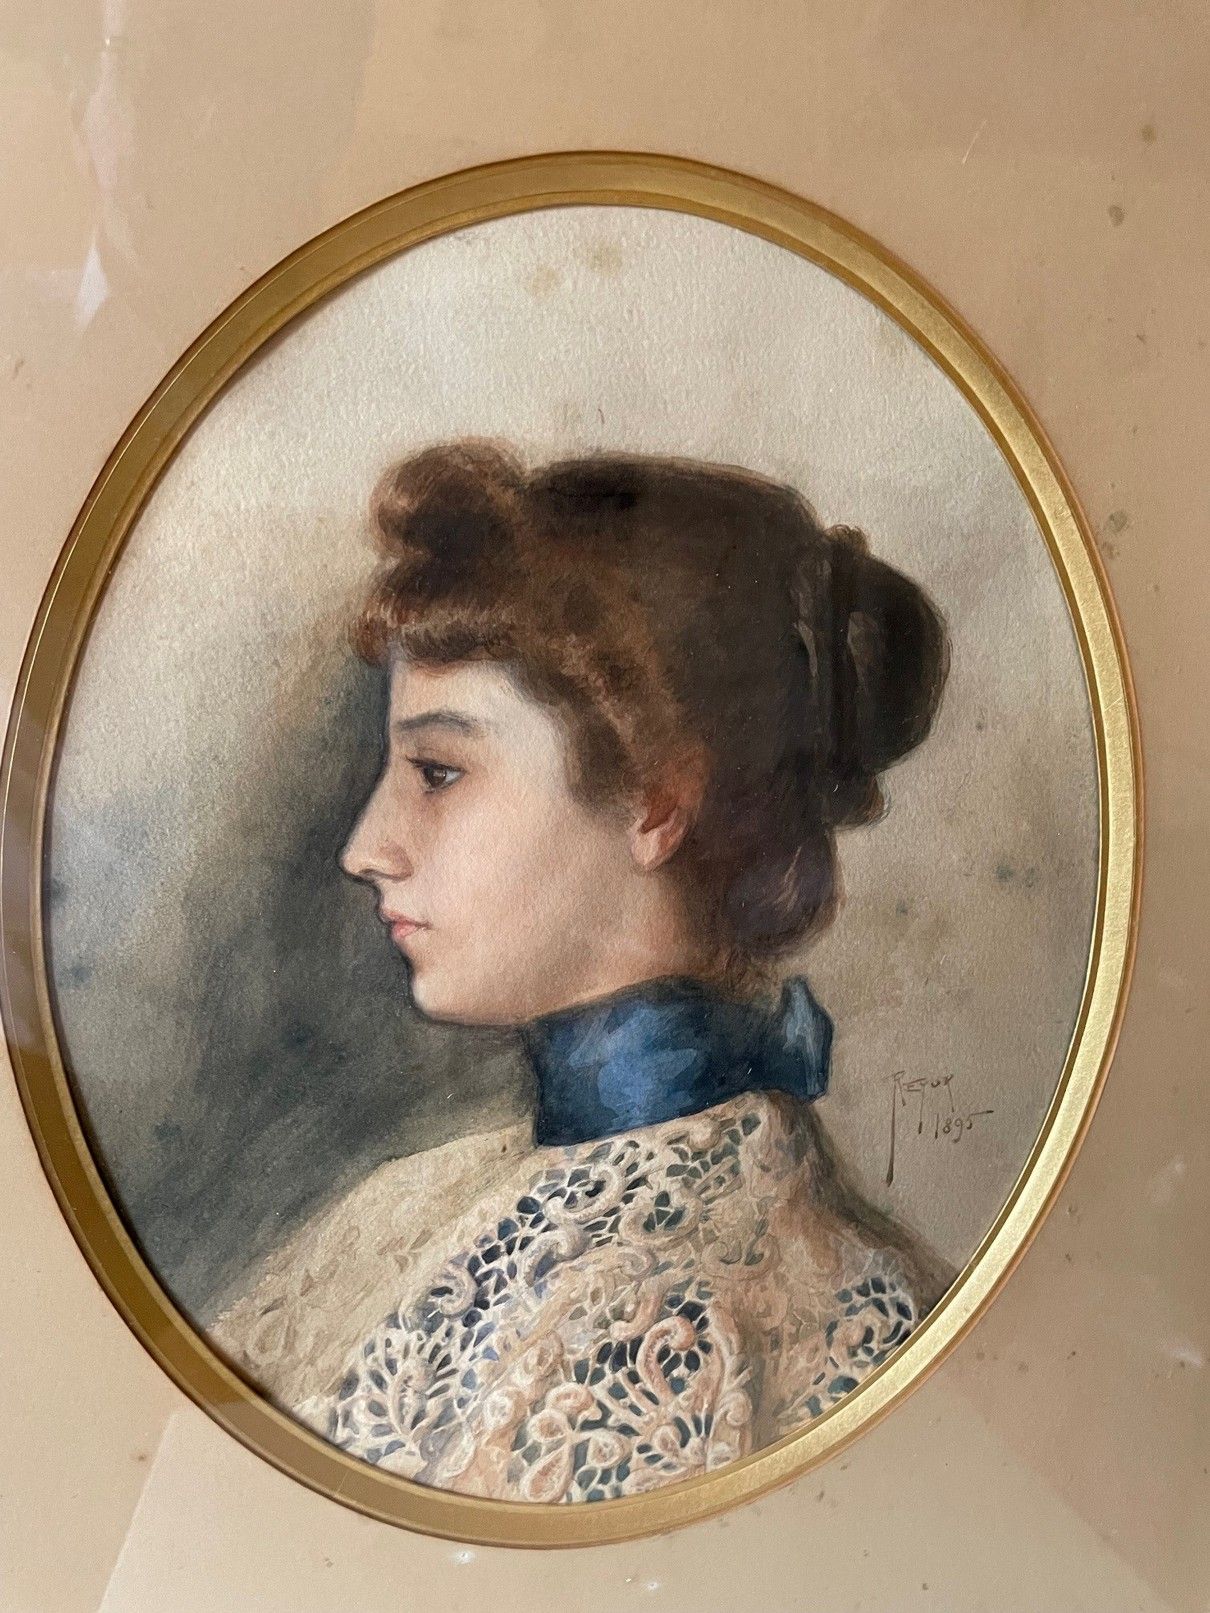 Null "一个女人的侧面画像

椭圆形的水彩画，署名REYOP，日期为1895年

27 x 21,5 cm